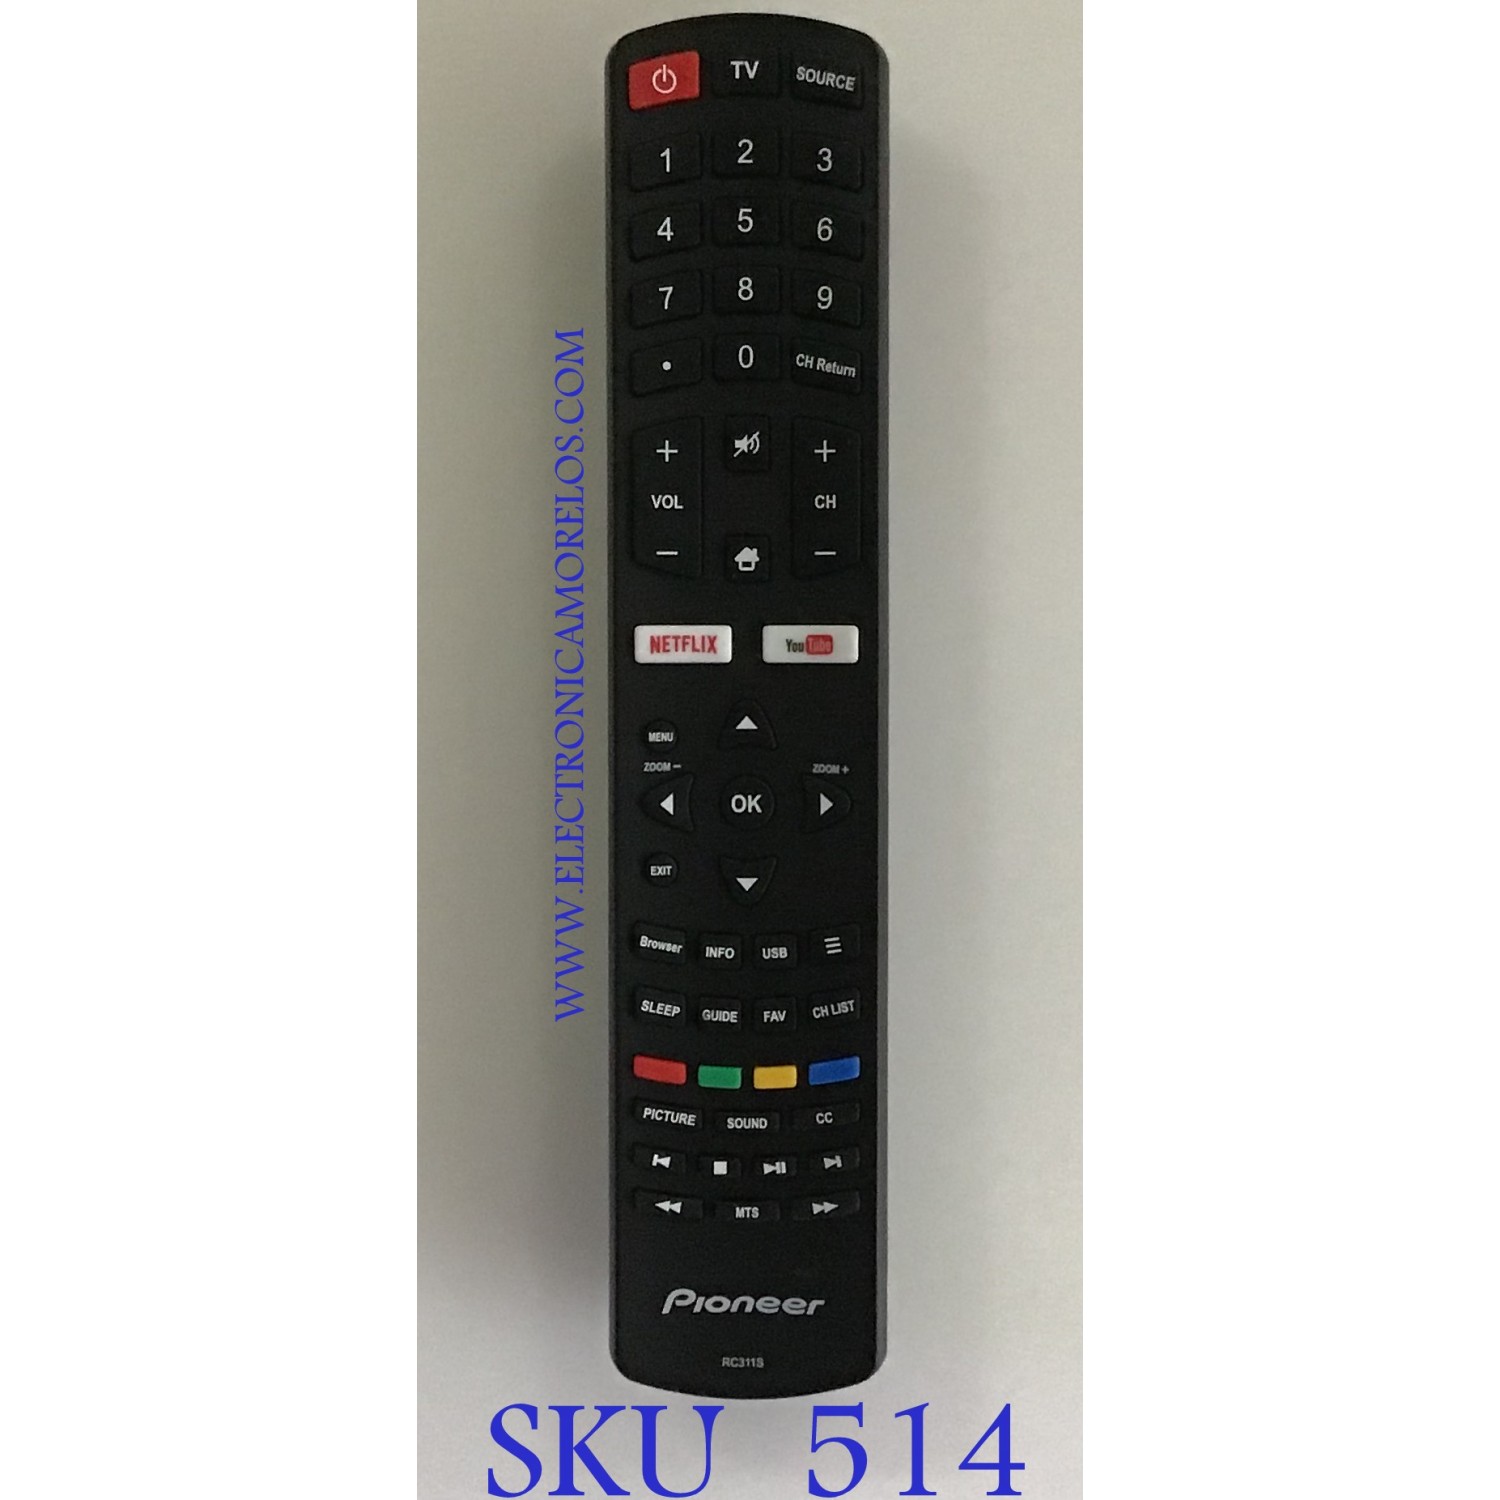 CONTROL REMOTO PIONEER SMART TV / 06-531W52-PI01X / RC311S / T170805001788R2